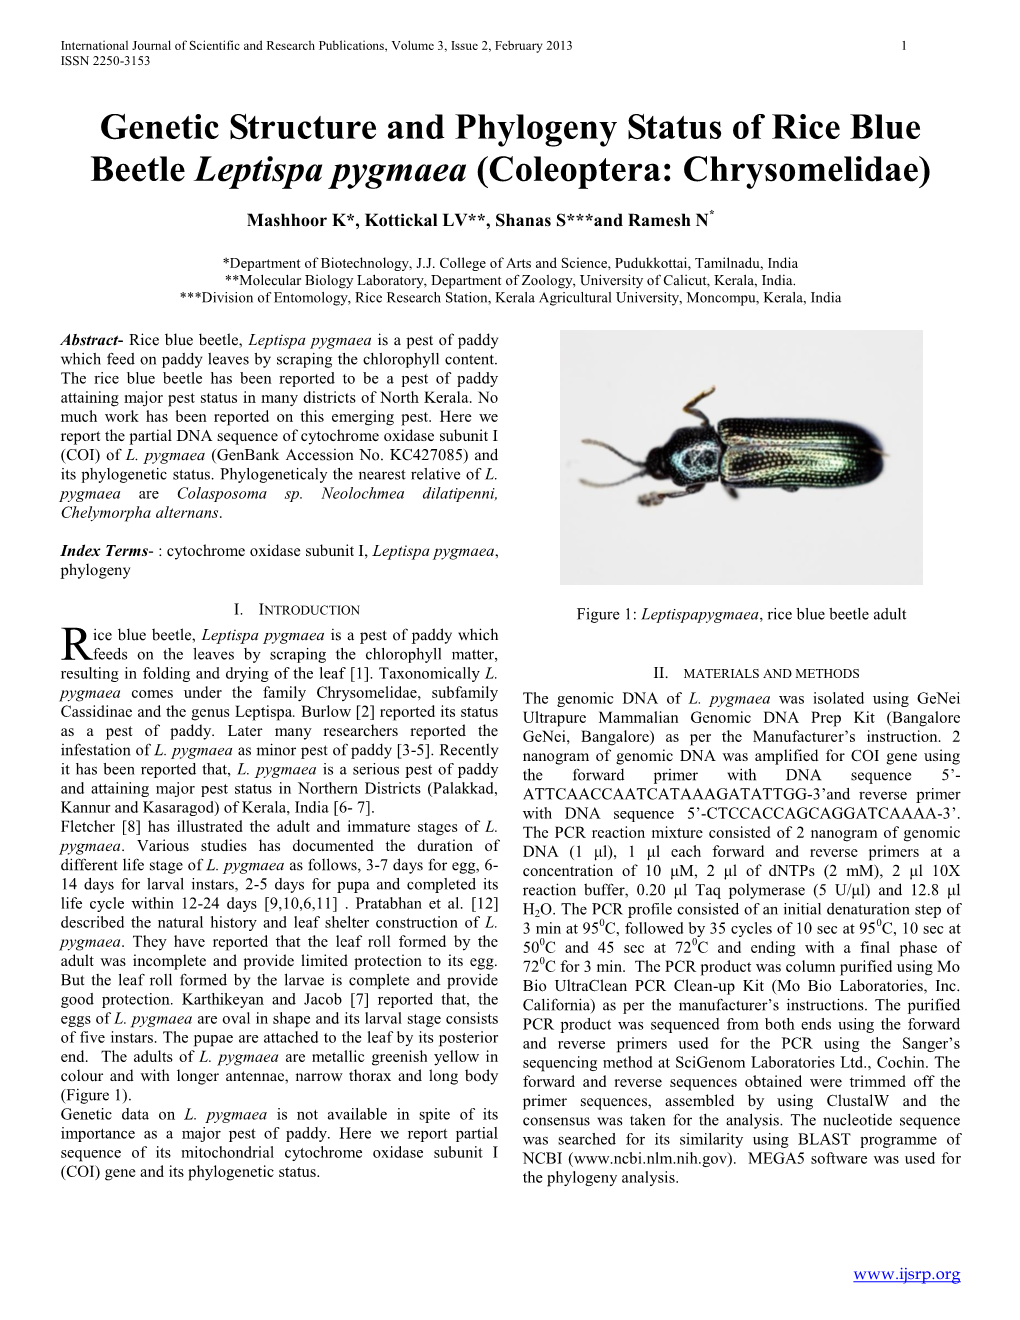 Genetic Structure and Phylogeny Status of Rice Blue Beetle Leptispa Pygmaea (Coleoptera: Chrysomelidae)